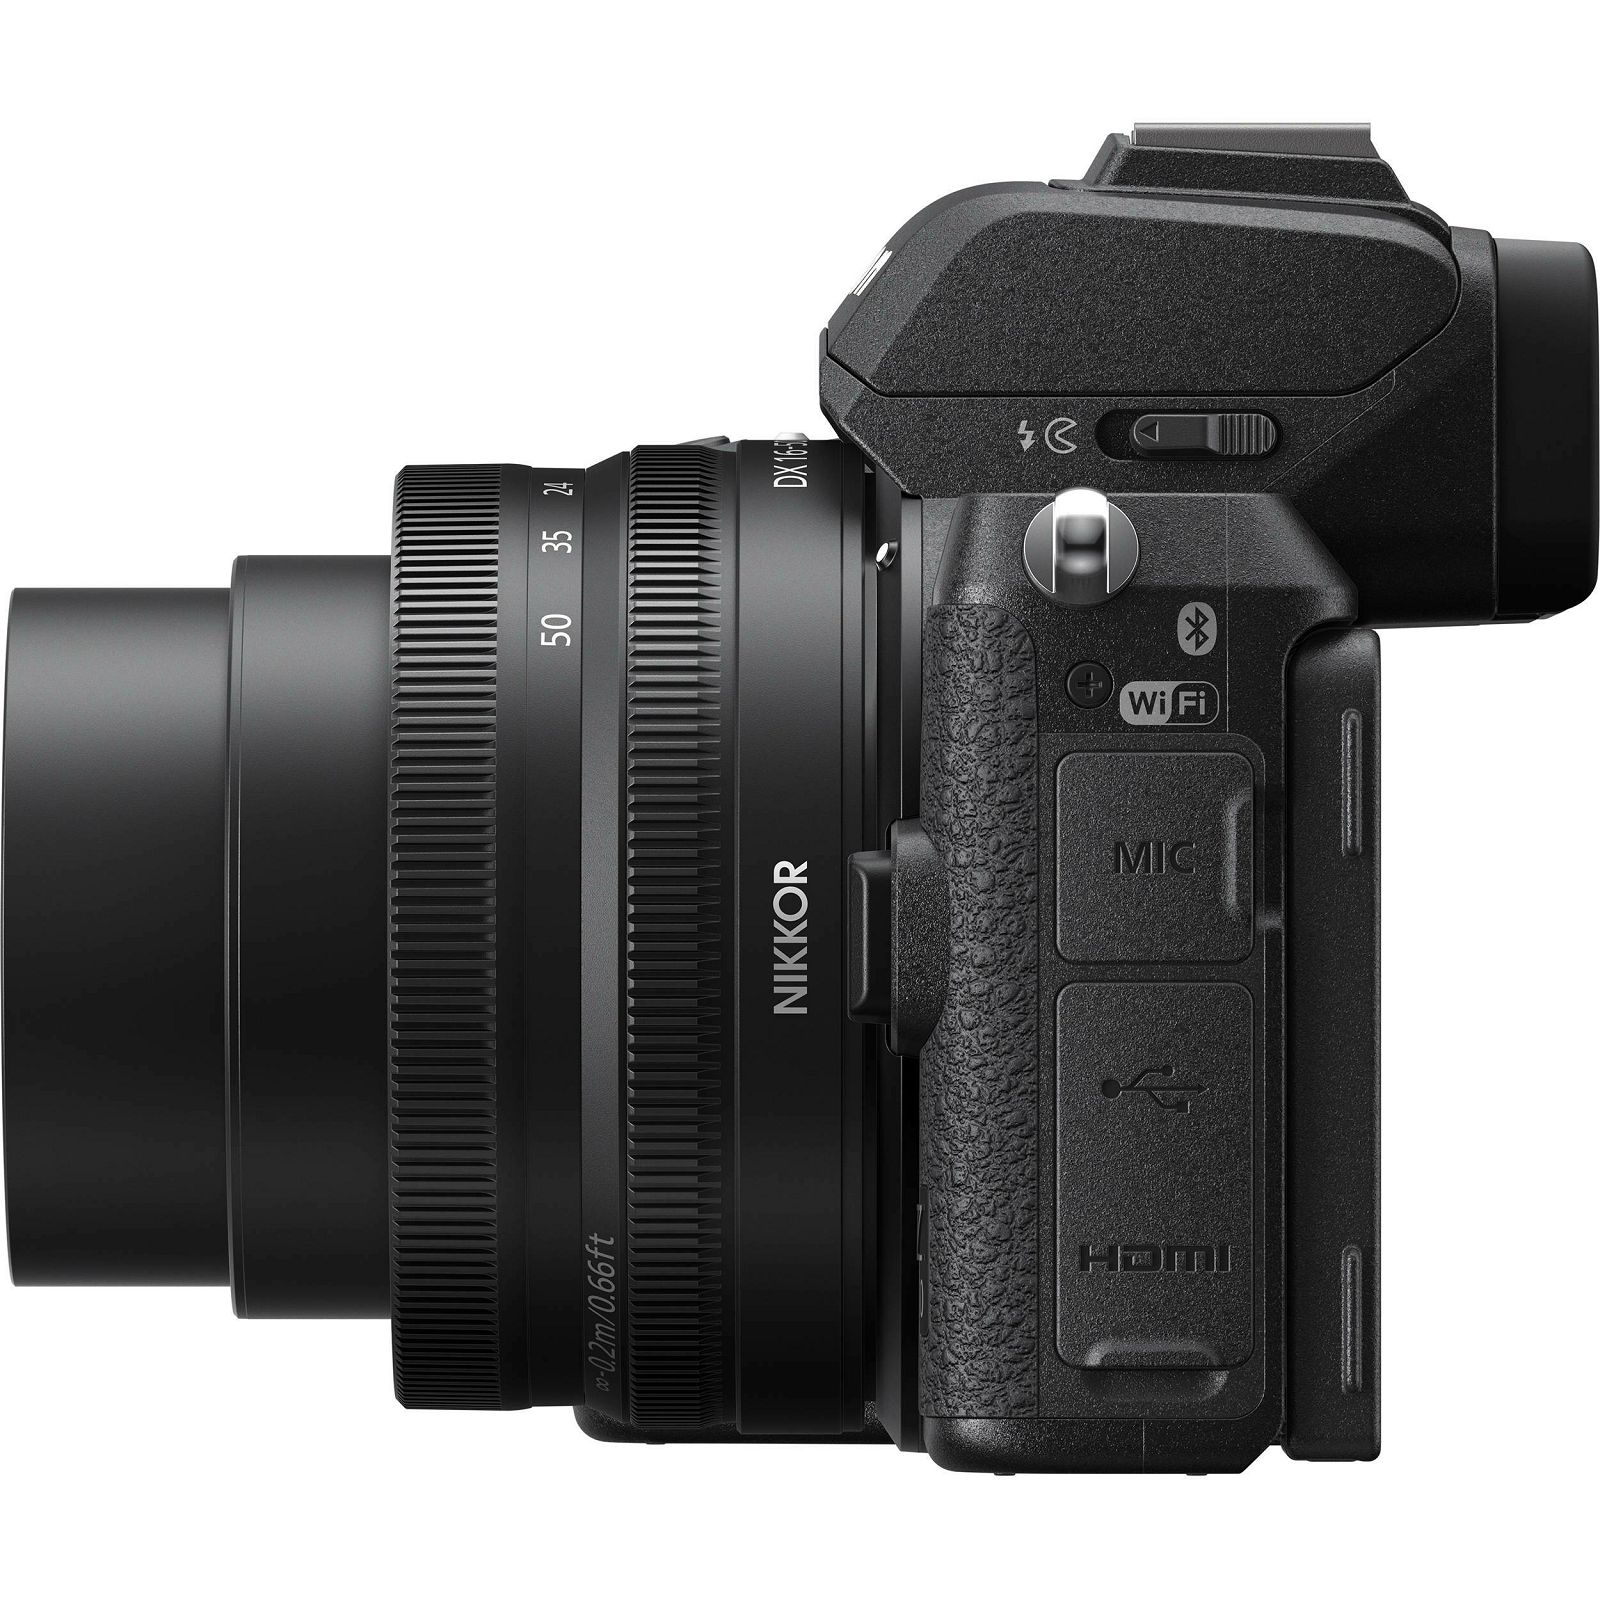 Nikon Z50 + Z 16-50mm f/3.5-6.3 VR DX + FTZ Adapter KIT Mirrorless Digital Camera bezrcalni digitalni fotoaparat tijelo s objektivom i adapterom (VOA050K004)